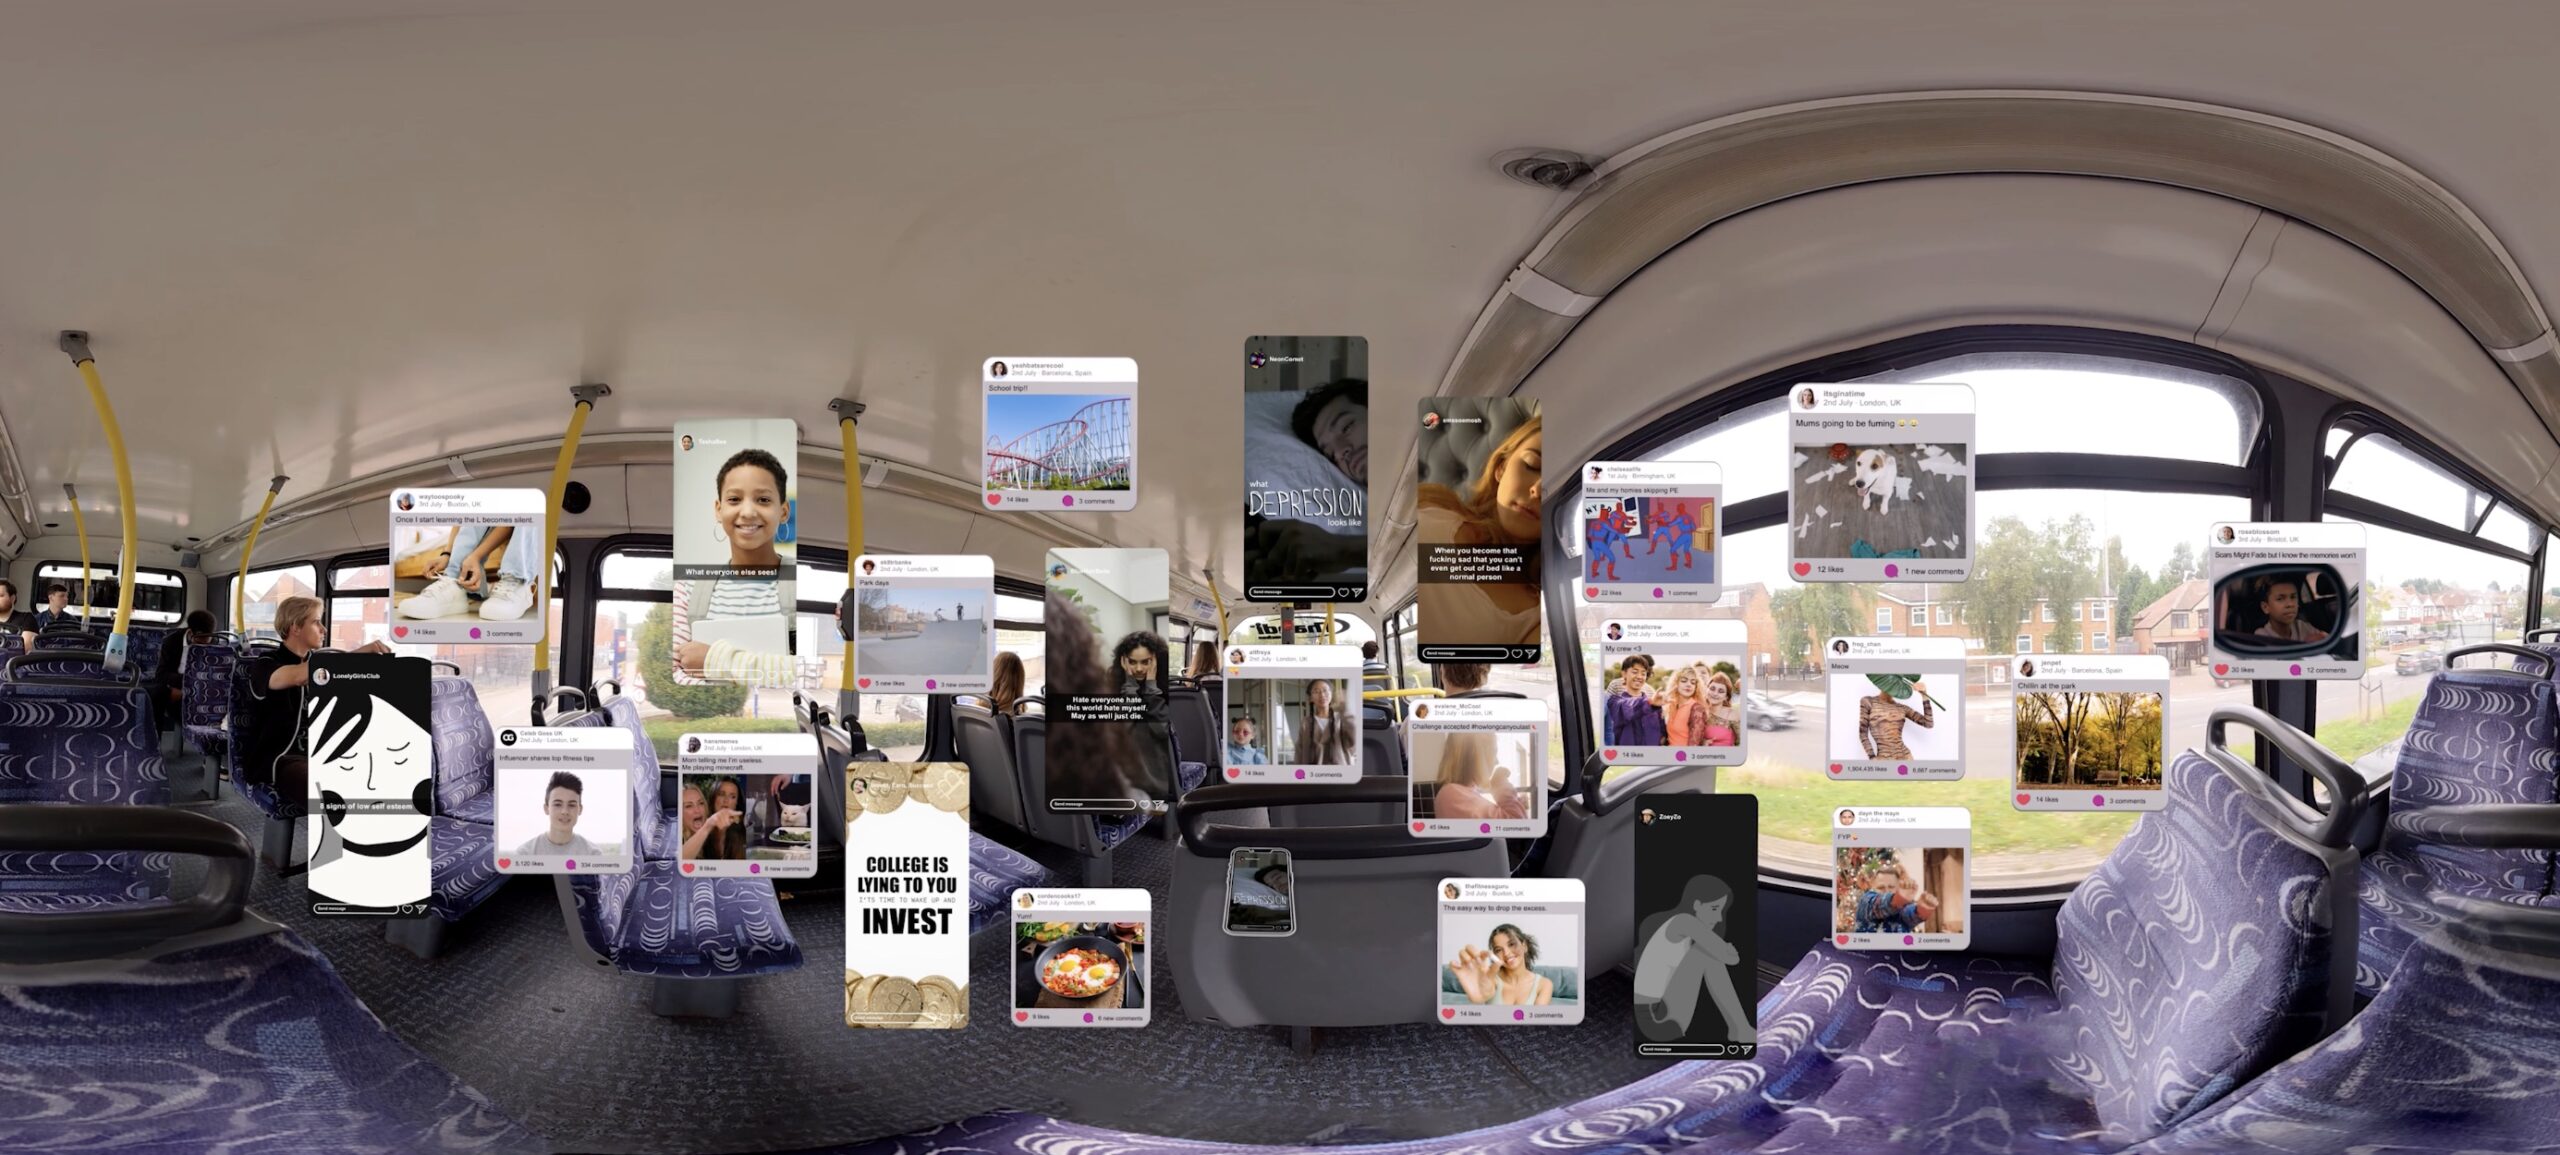 VR film with social media pop ups on bus